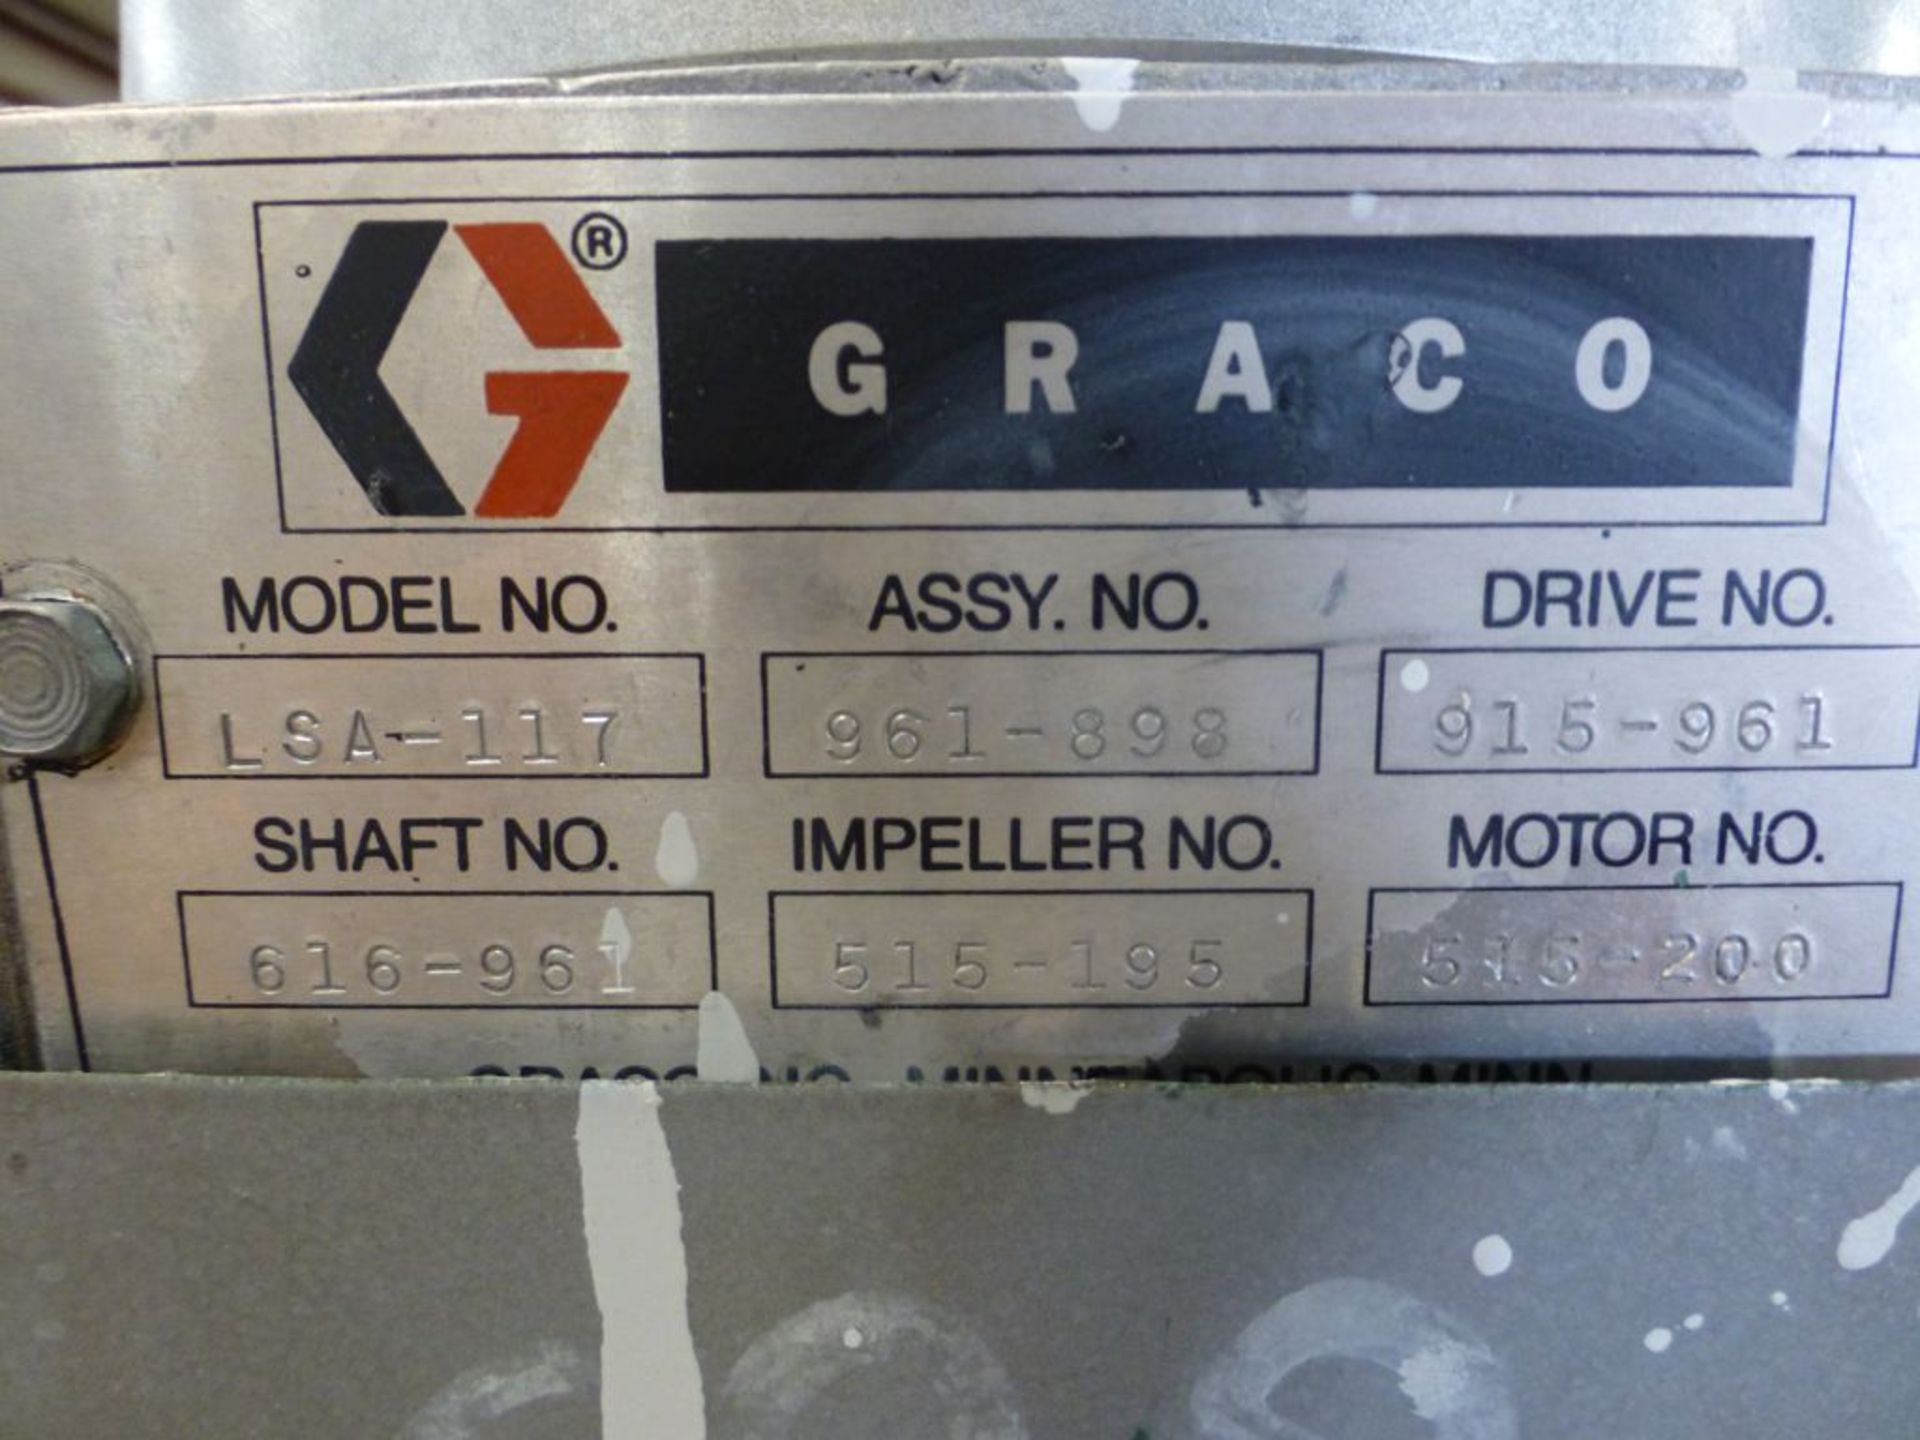 1987 Graco 616-341 Stainless Steel Tank|Includes:; Graco Agitator & Drexel Brook Sensor Model No. - Image 5 of 8